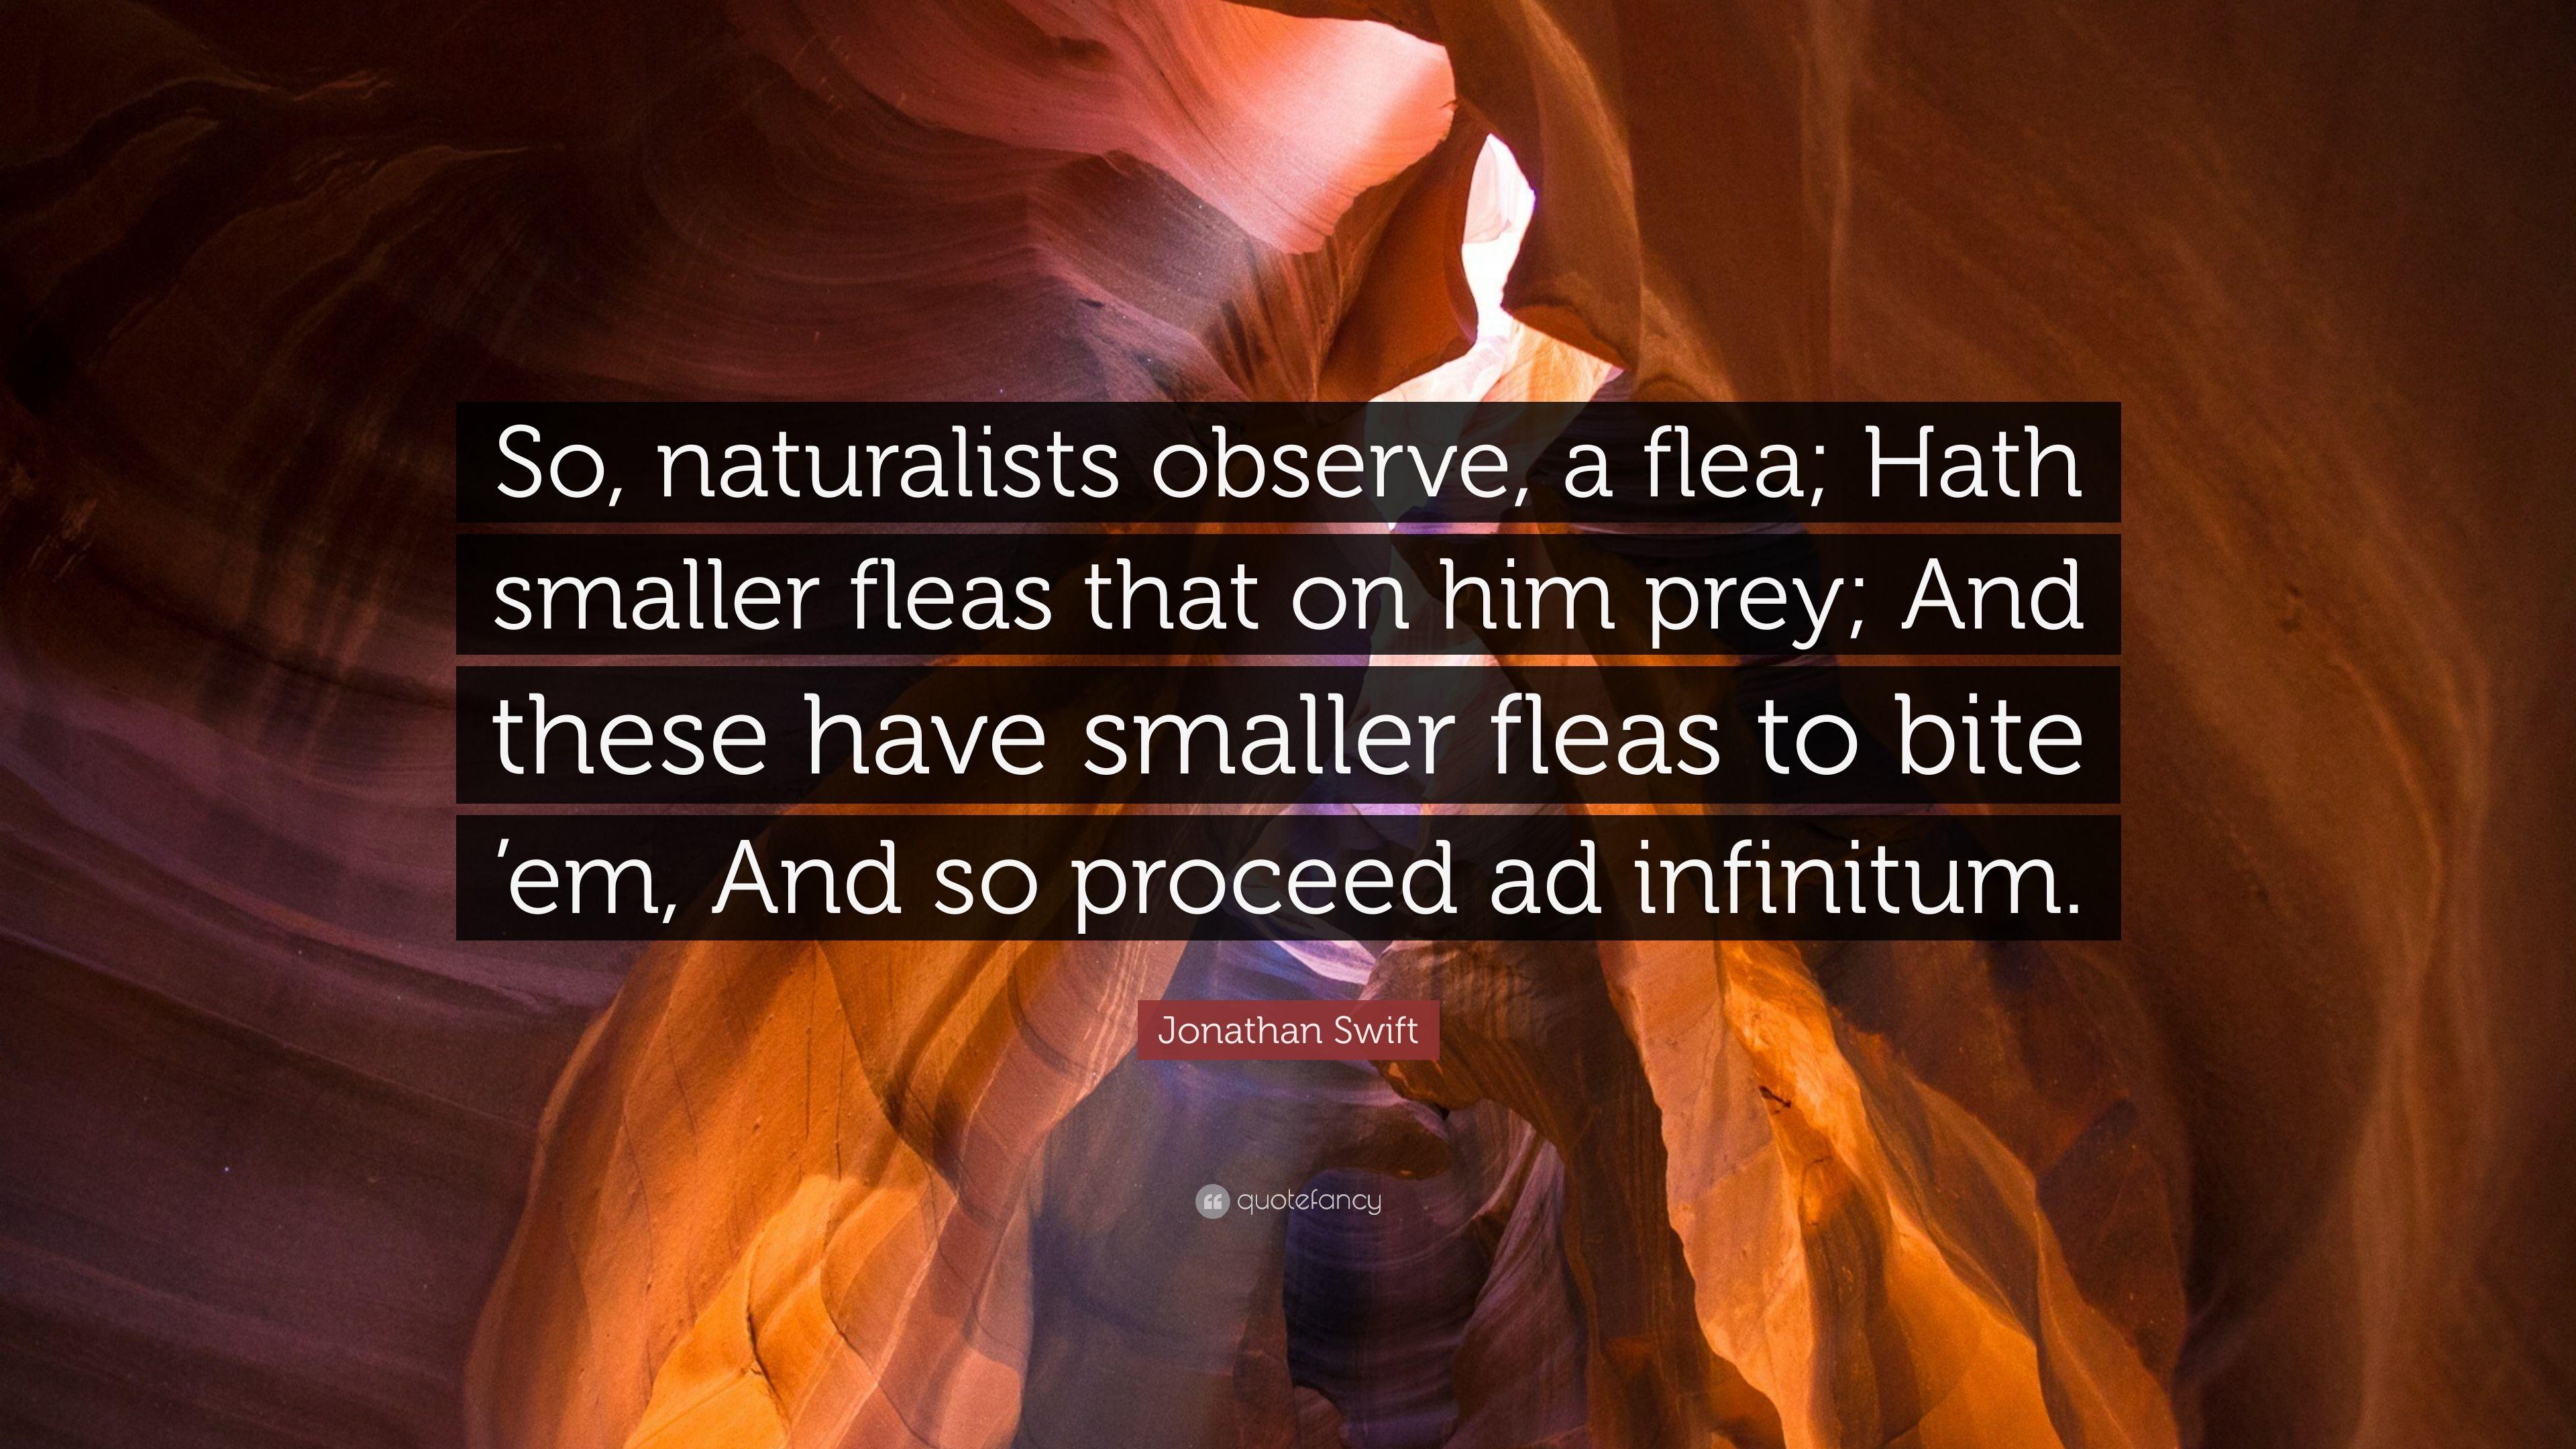 Jonathan Swift Quote: “So, naturalists observe, a flea; Hath